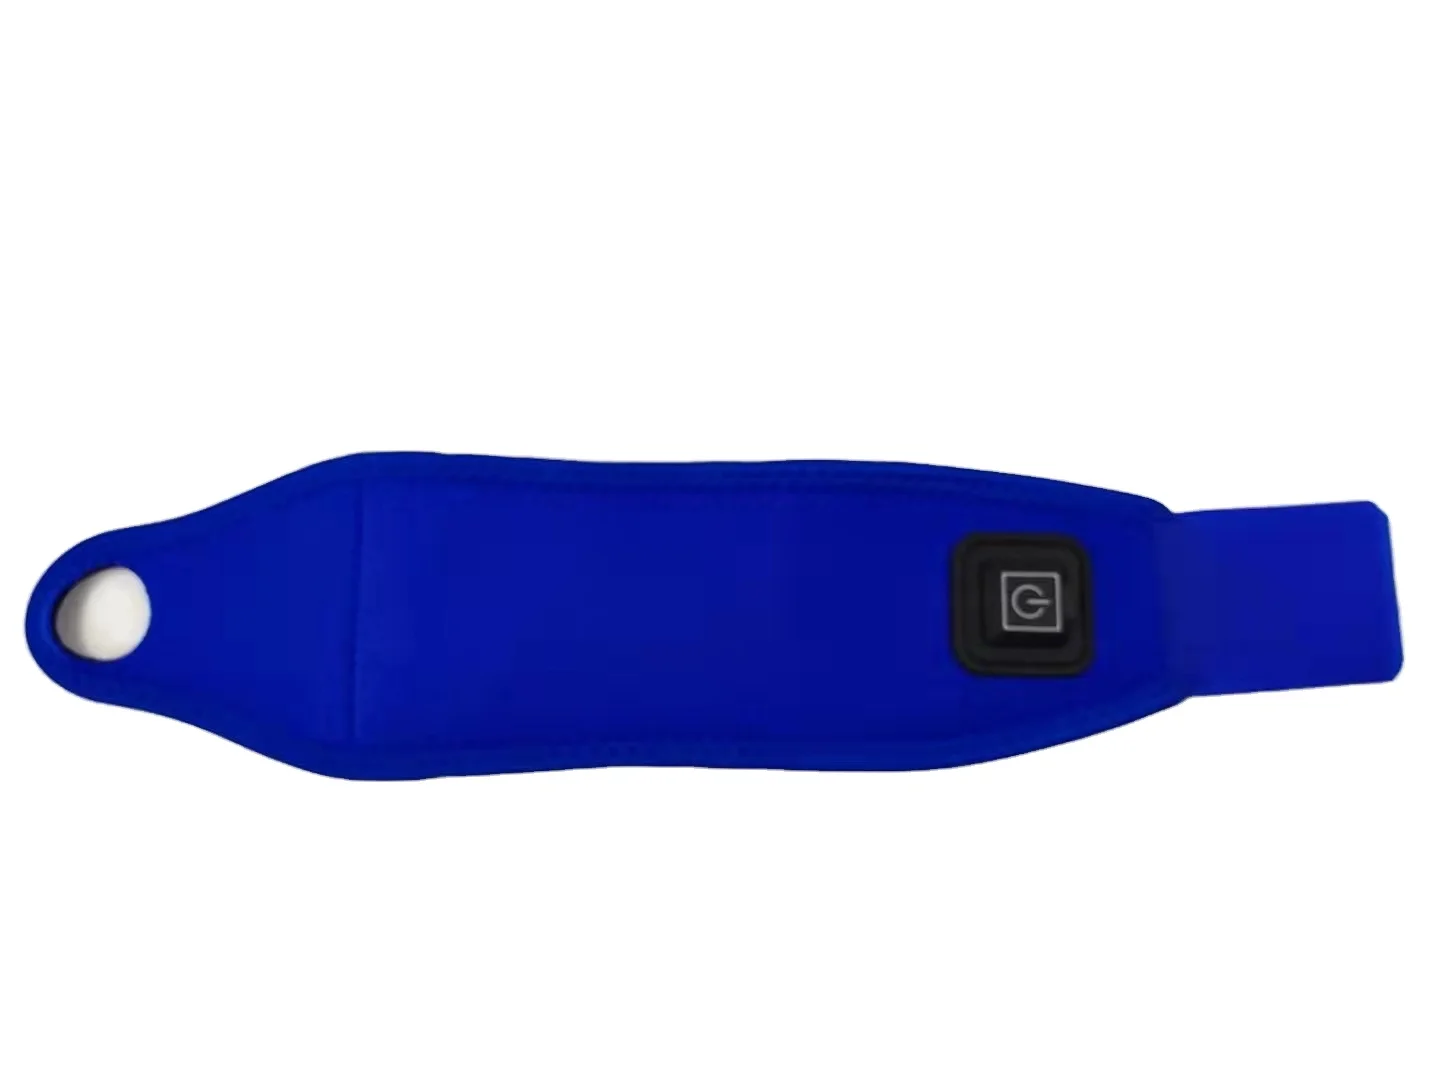 far infrared heated wrist support hand wrist warmer USB Charging  heating  wrist pad